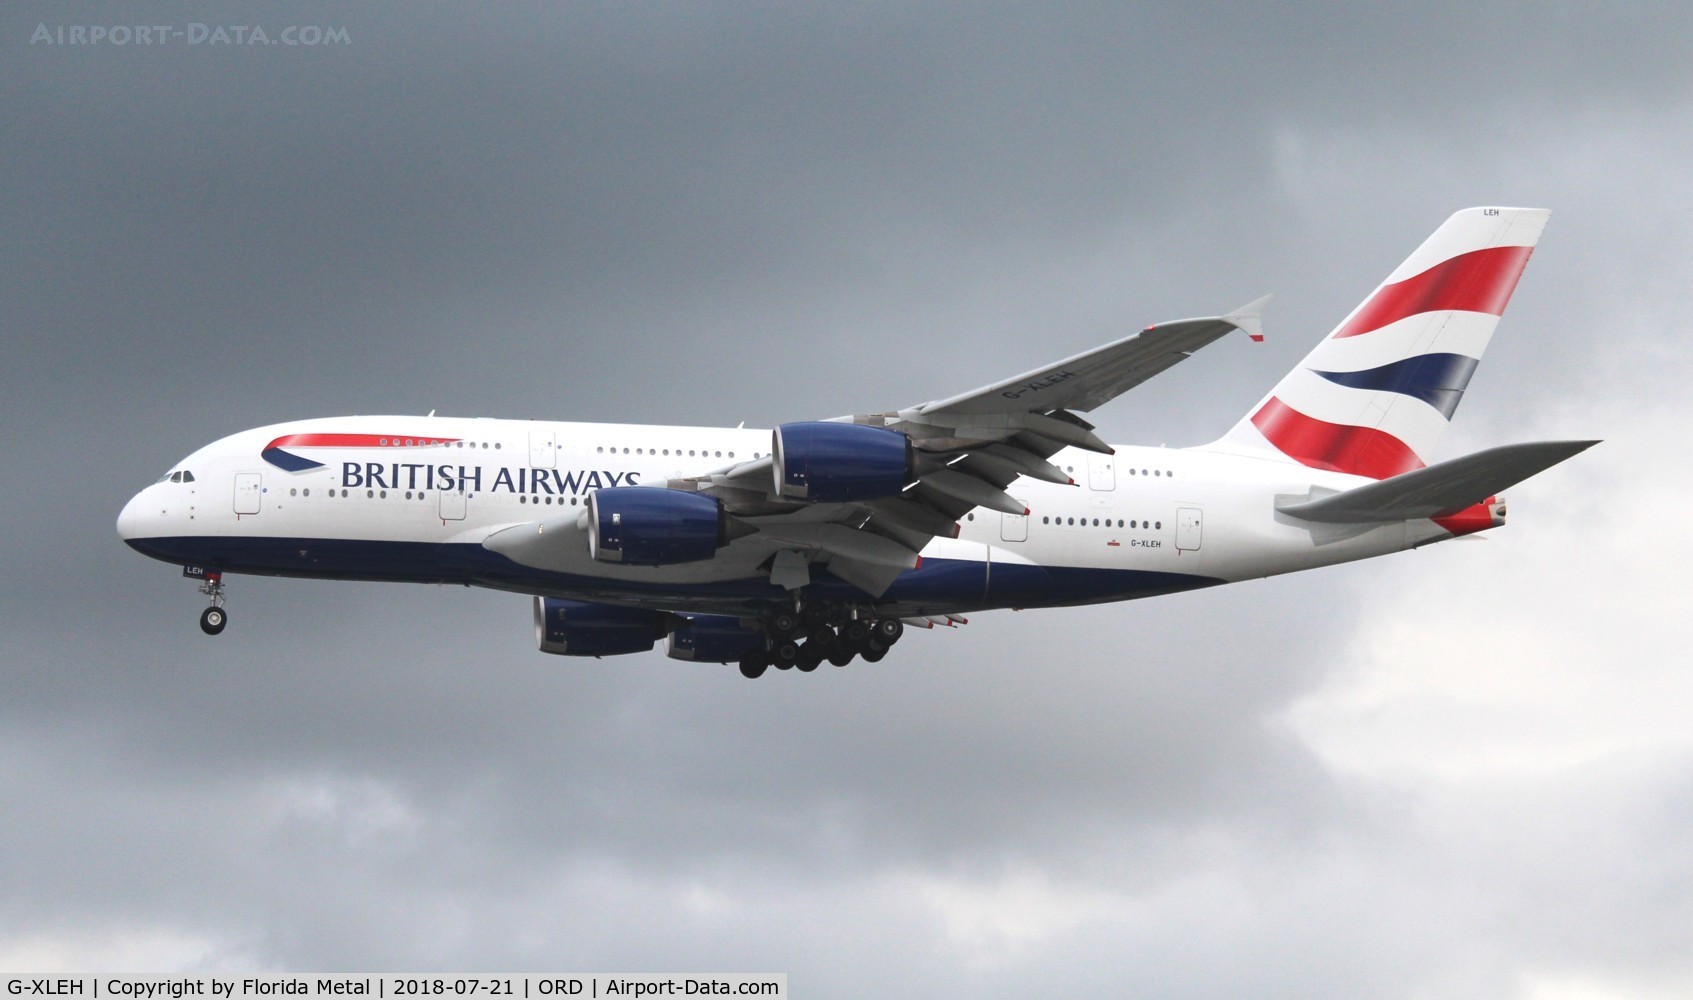 G-XLEH, 2014 Airbus A380-841 C/N 163, British